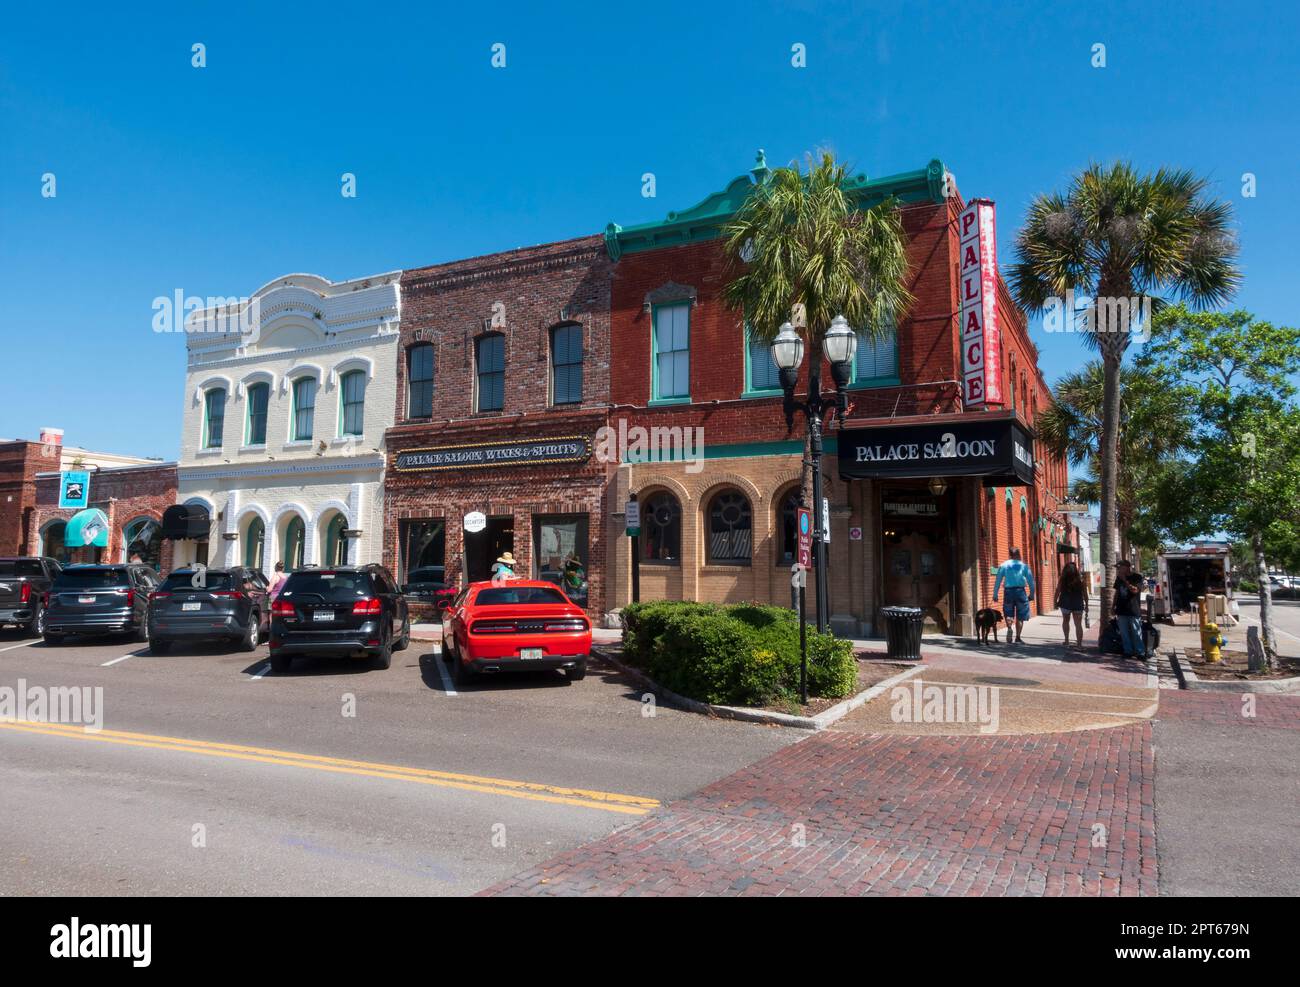 Palace Saloon, Fernandina Beach, Amelia Island, Florida Stockfoto